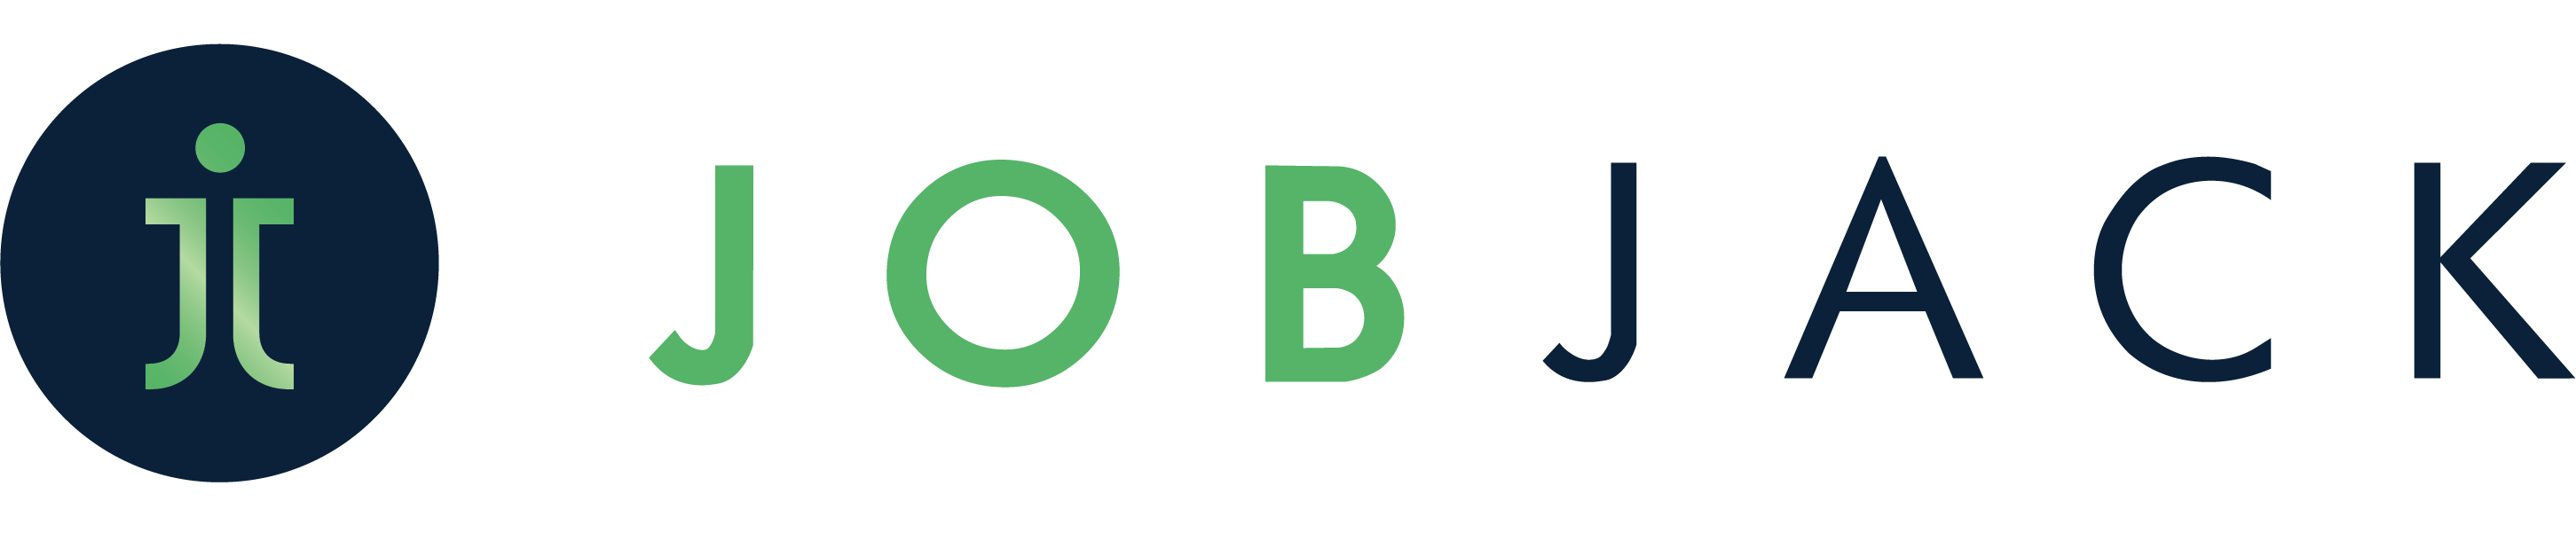 JOBJACK navbar logo